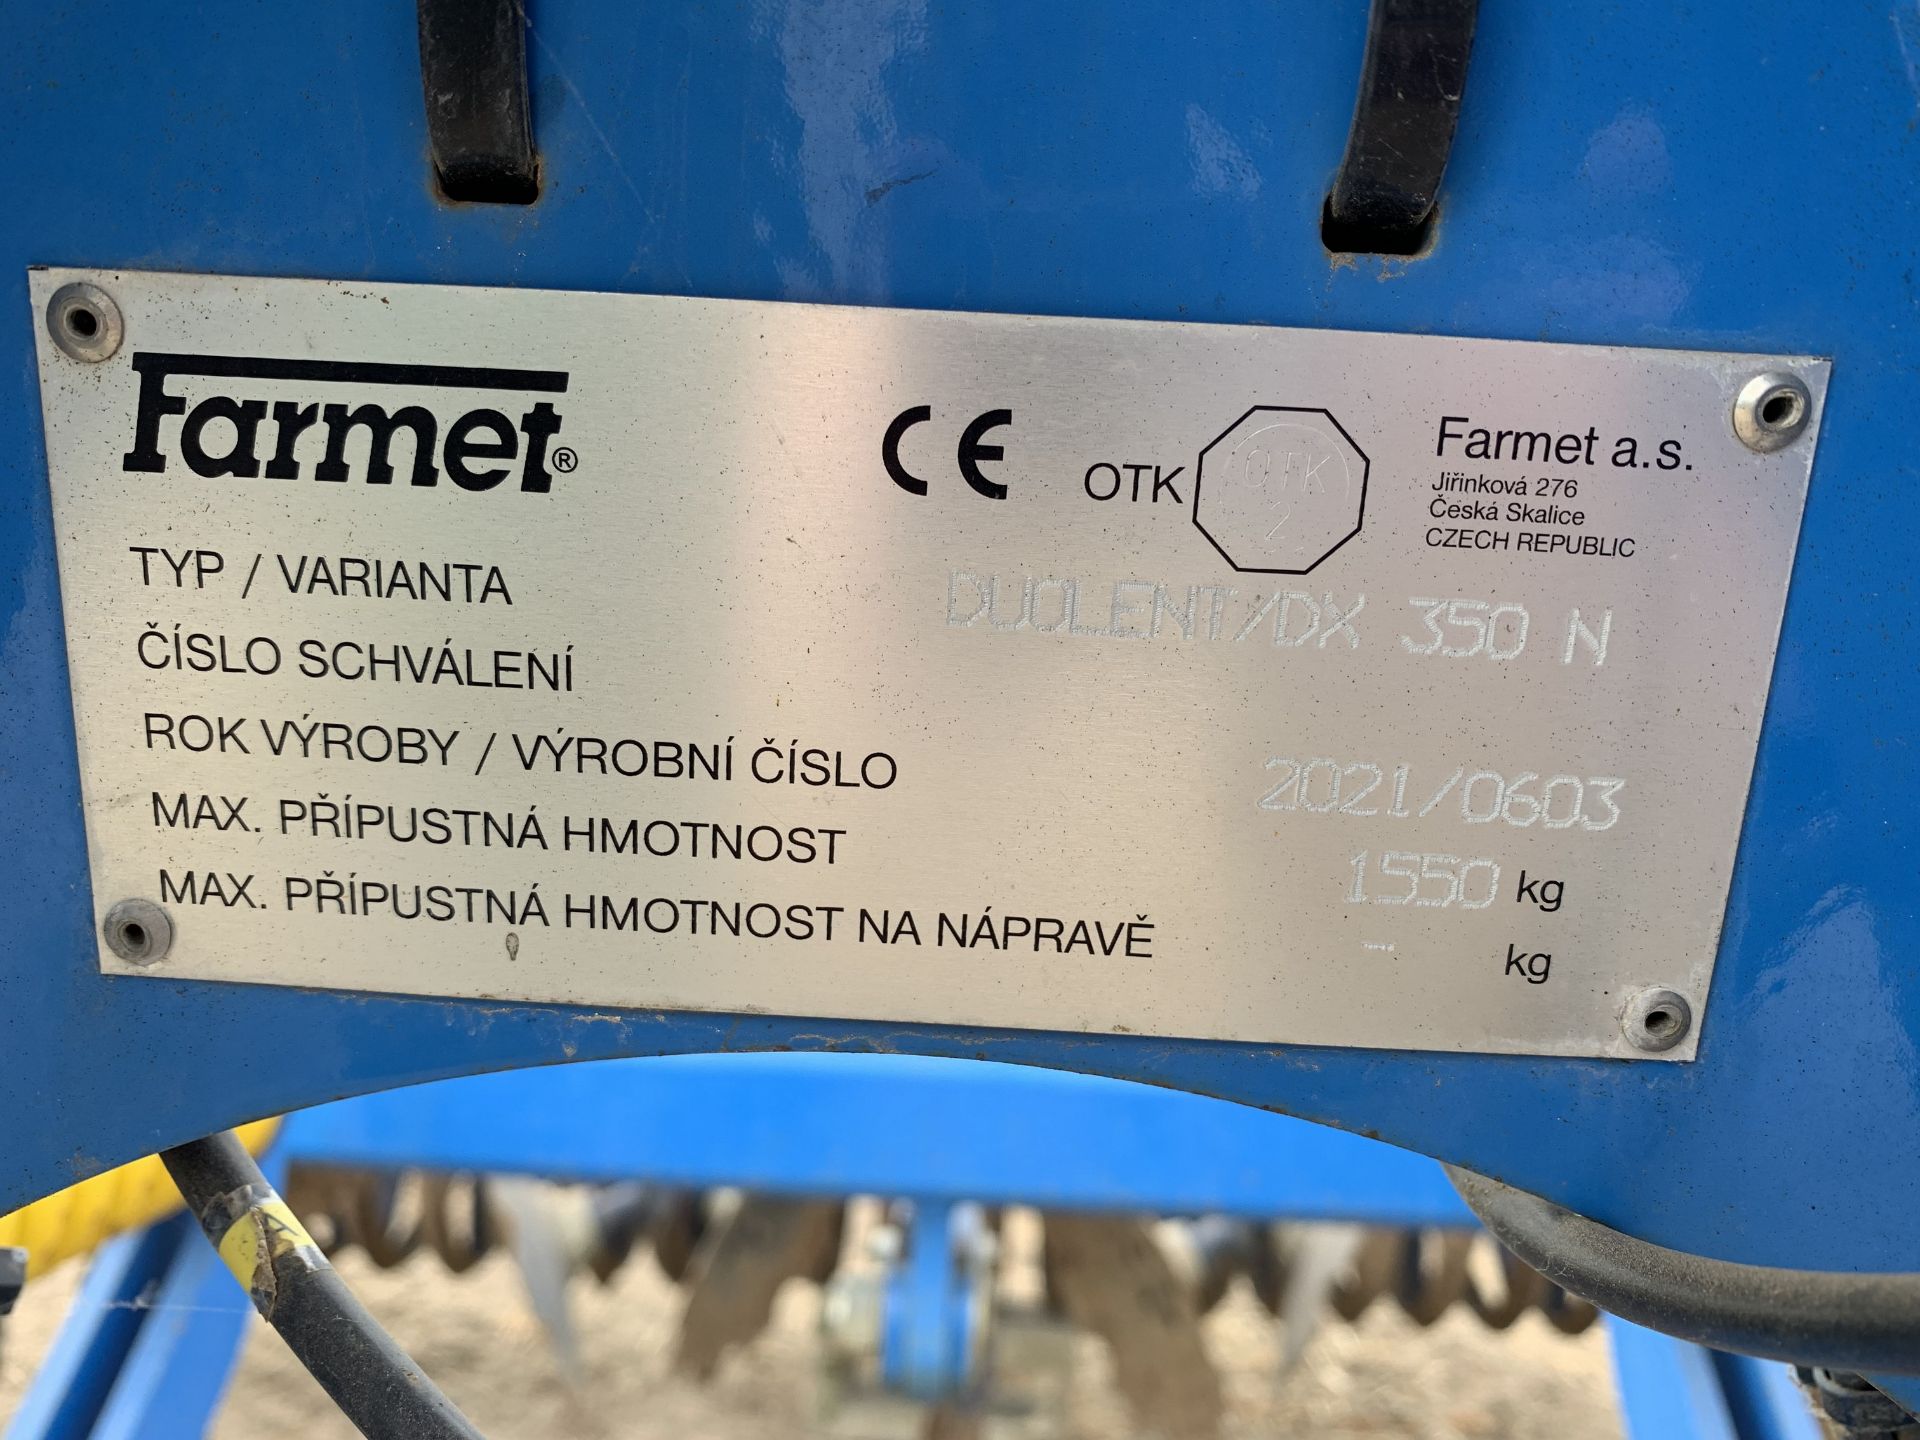 Farmet Duolent DX 350 N cultivator - Image 2 of 4